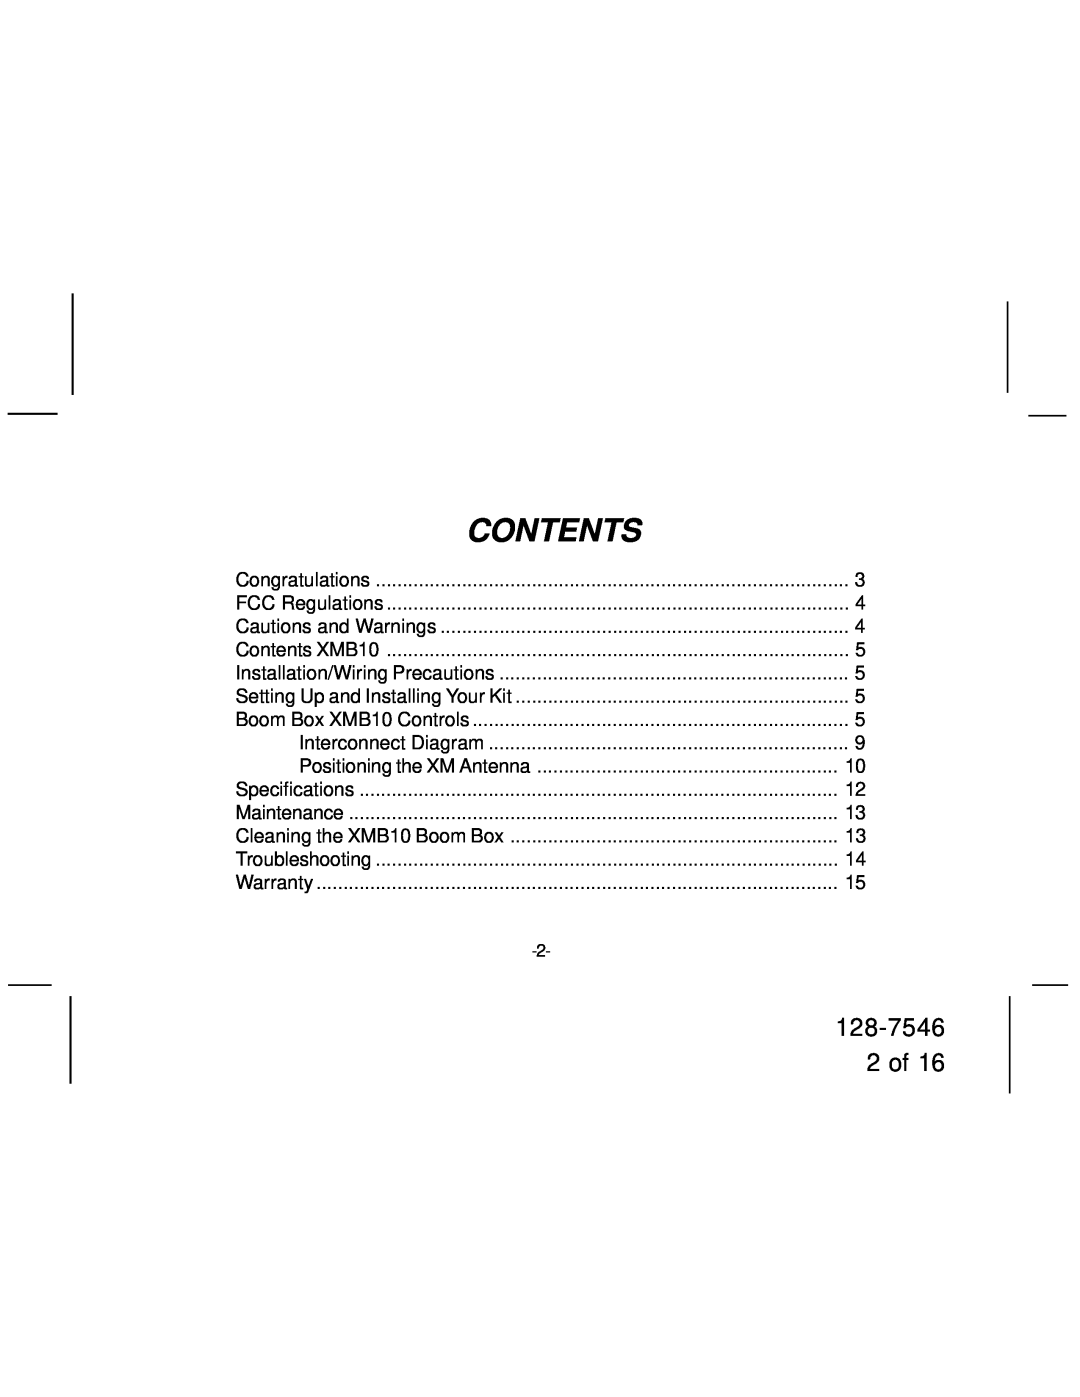 Audiovox XMB10 manual 128-7546 2 of, Contents 